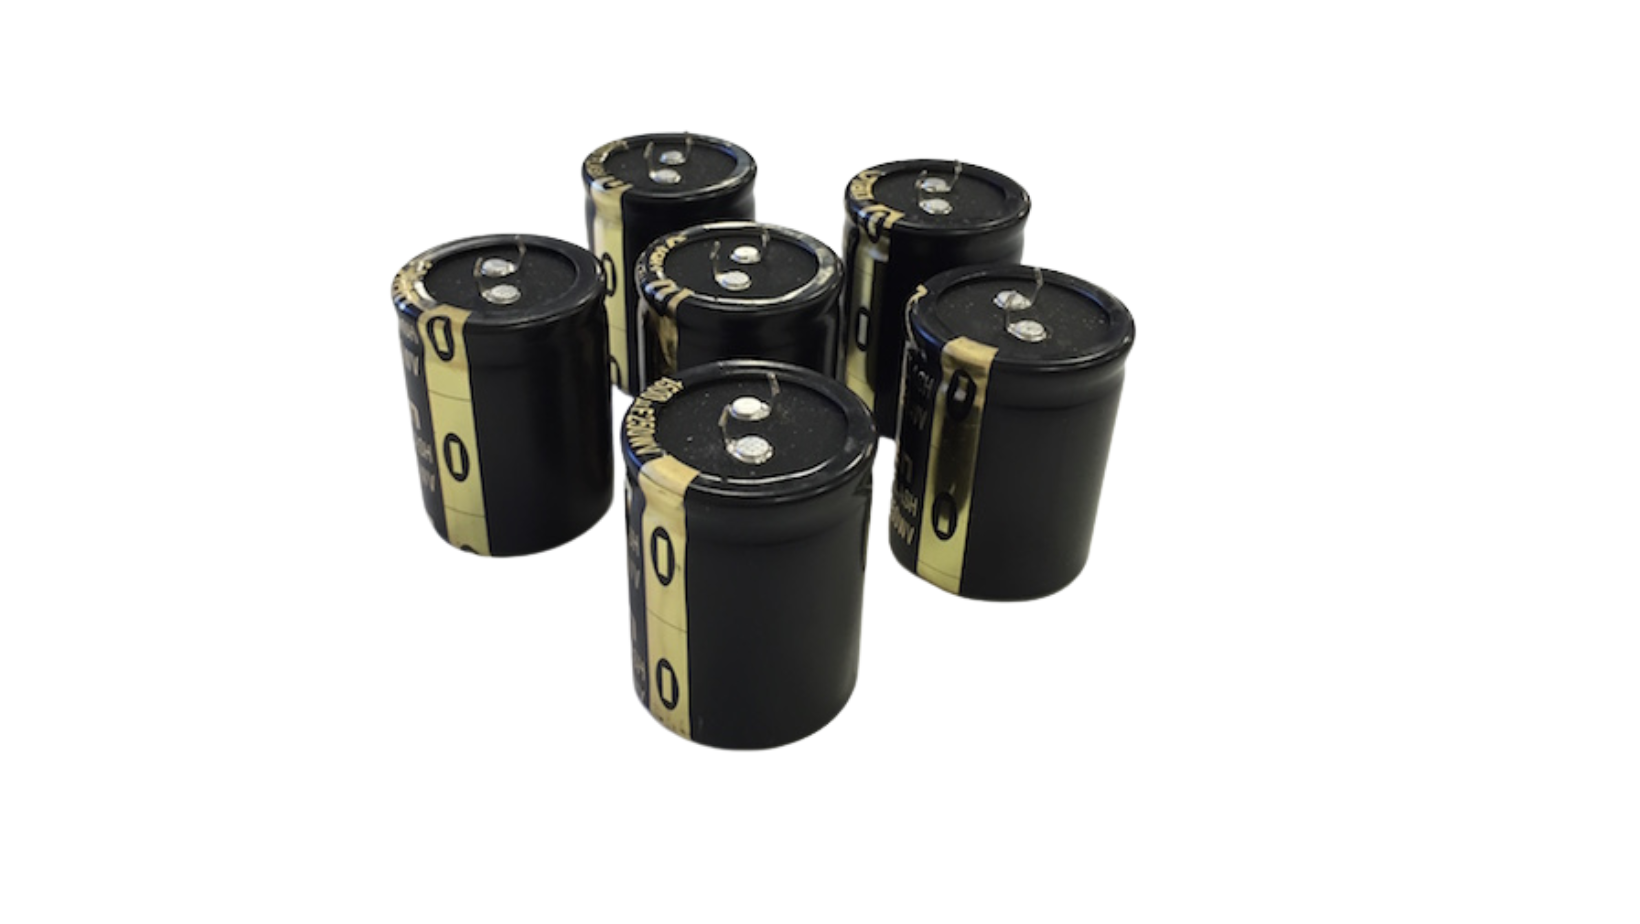 Low temperature capacitors, black and gold circular capacitors